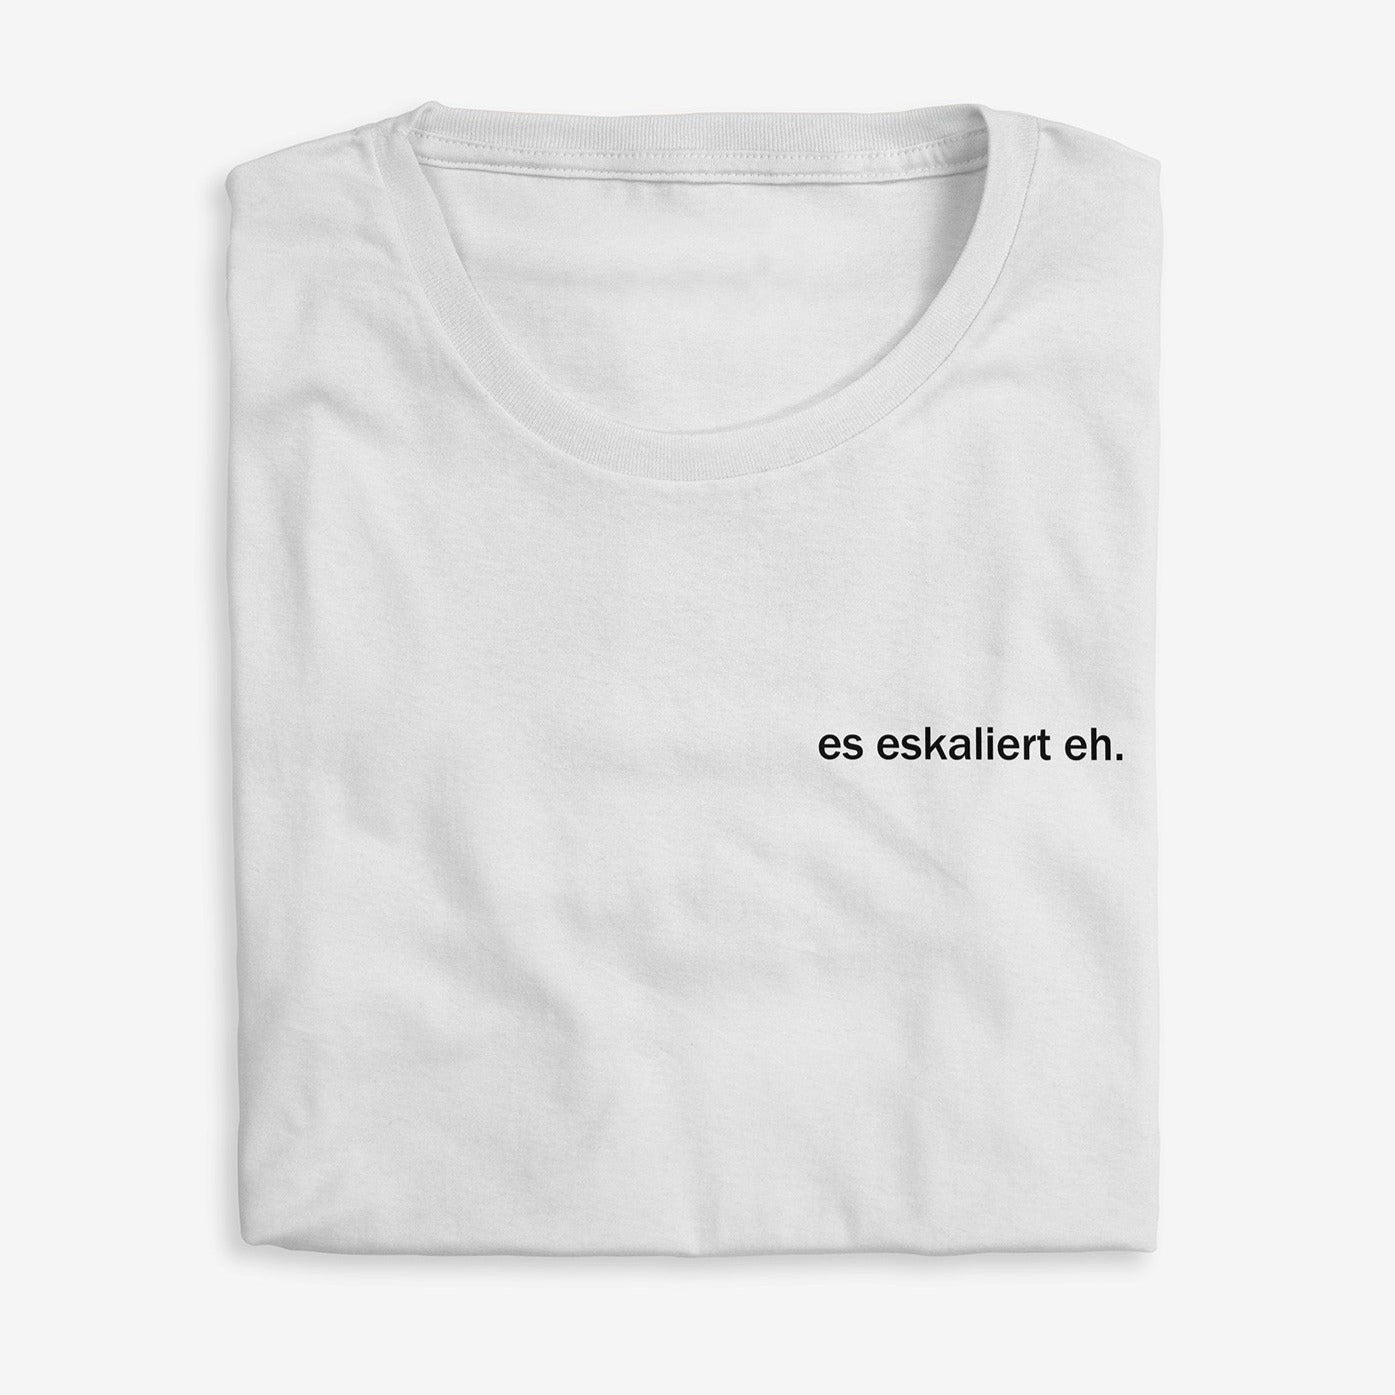 AKTION: ESKALIERT - Premium Shirt